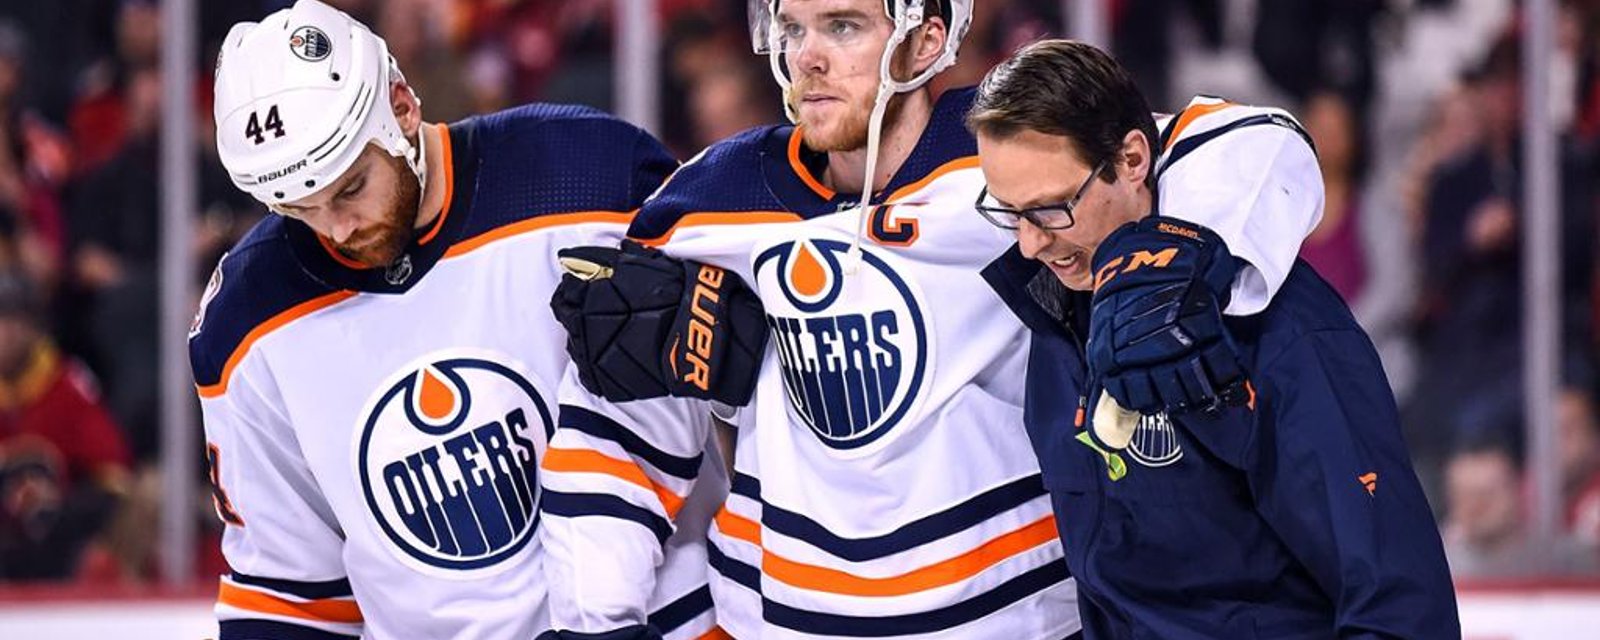 Breaking: Oilers announce urgent rehabilitation protocol for McDavid